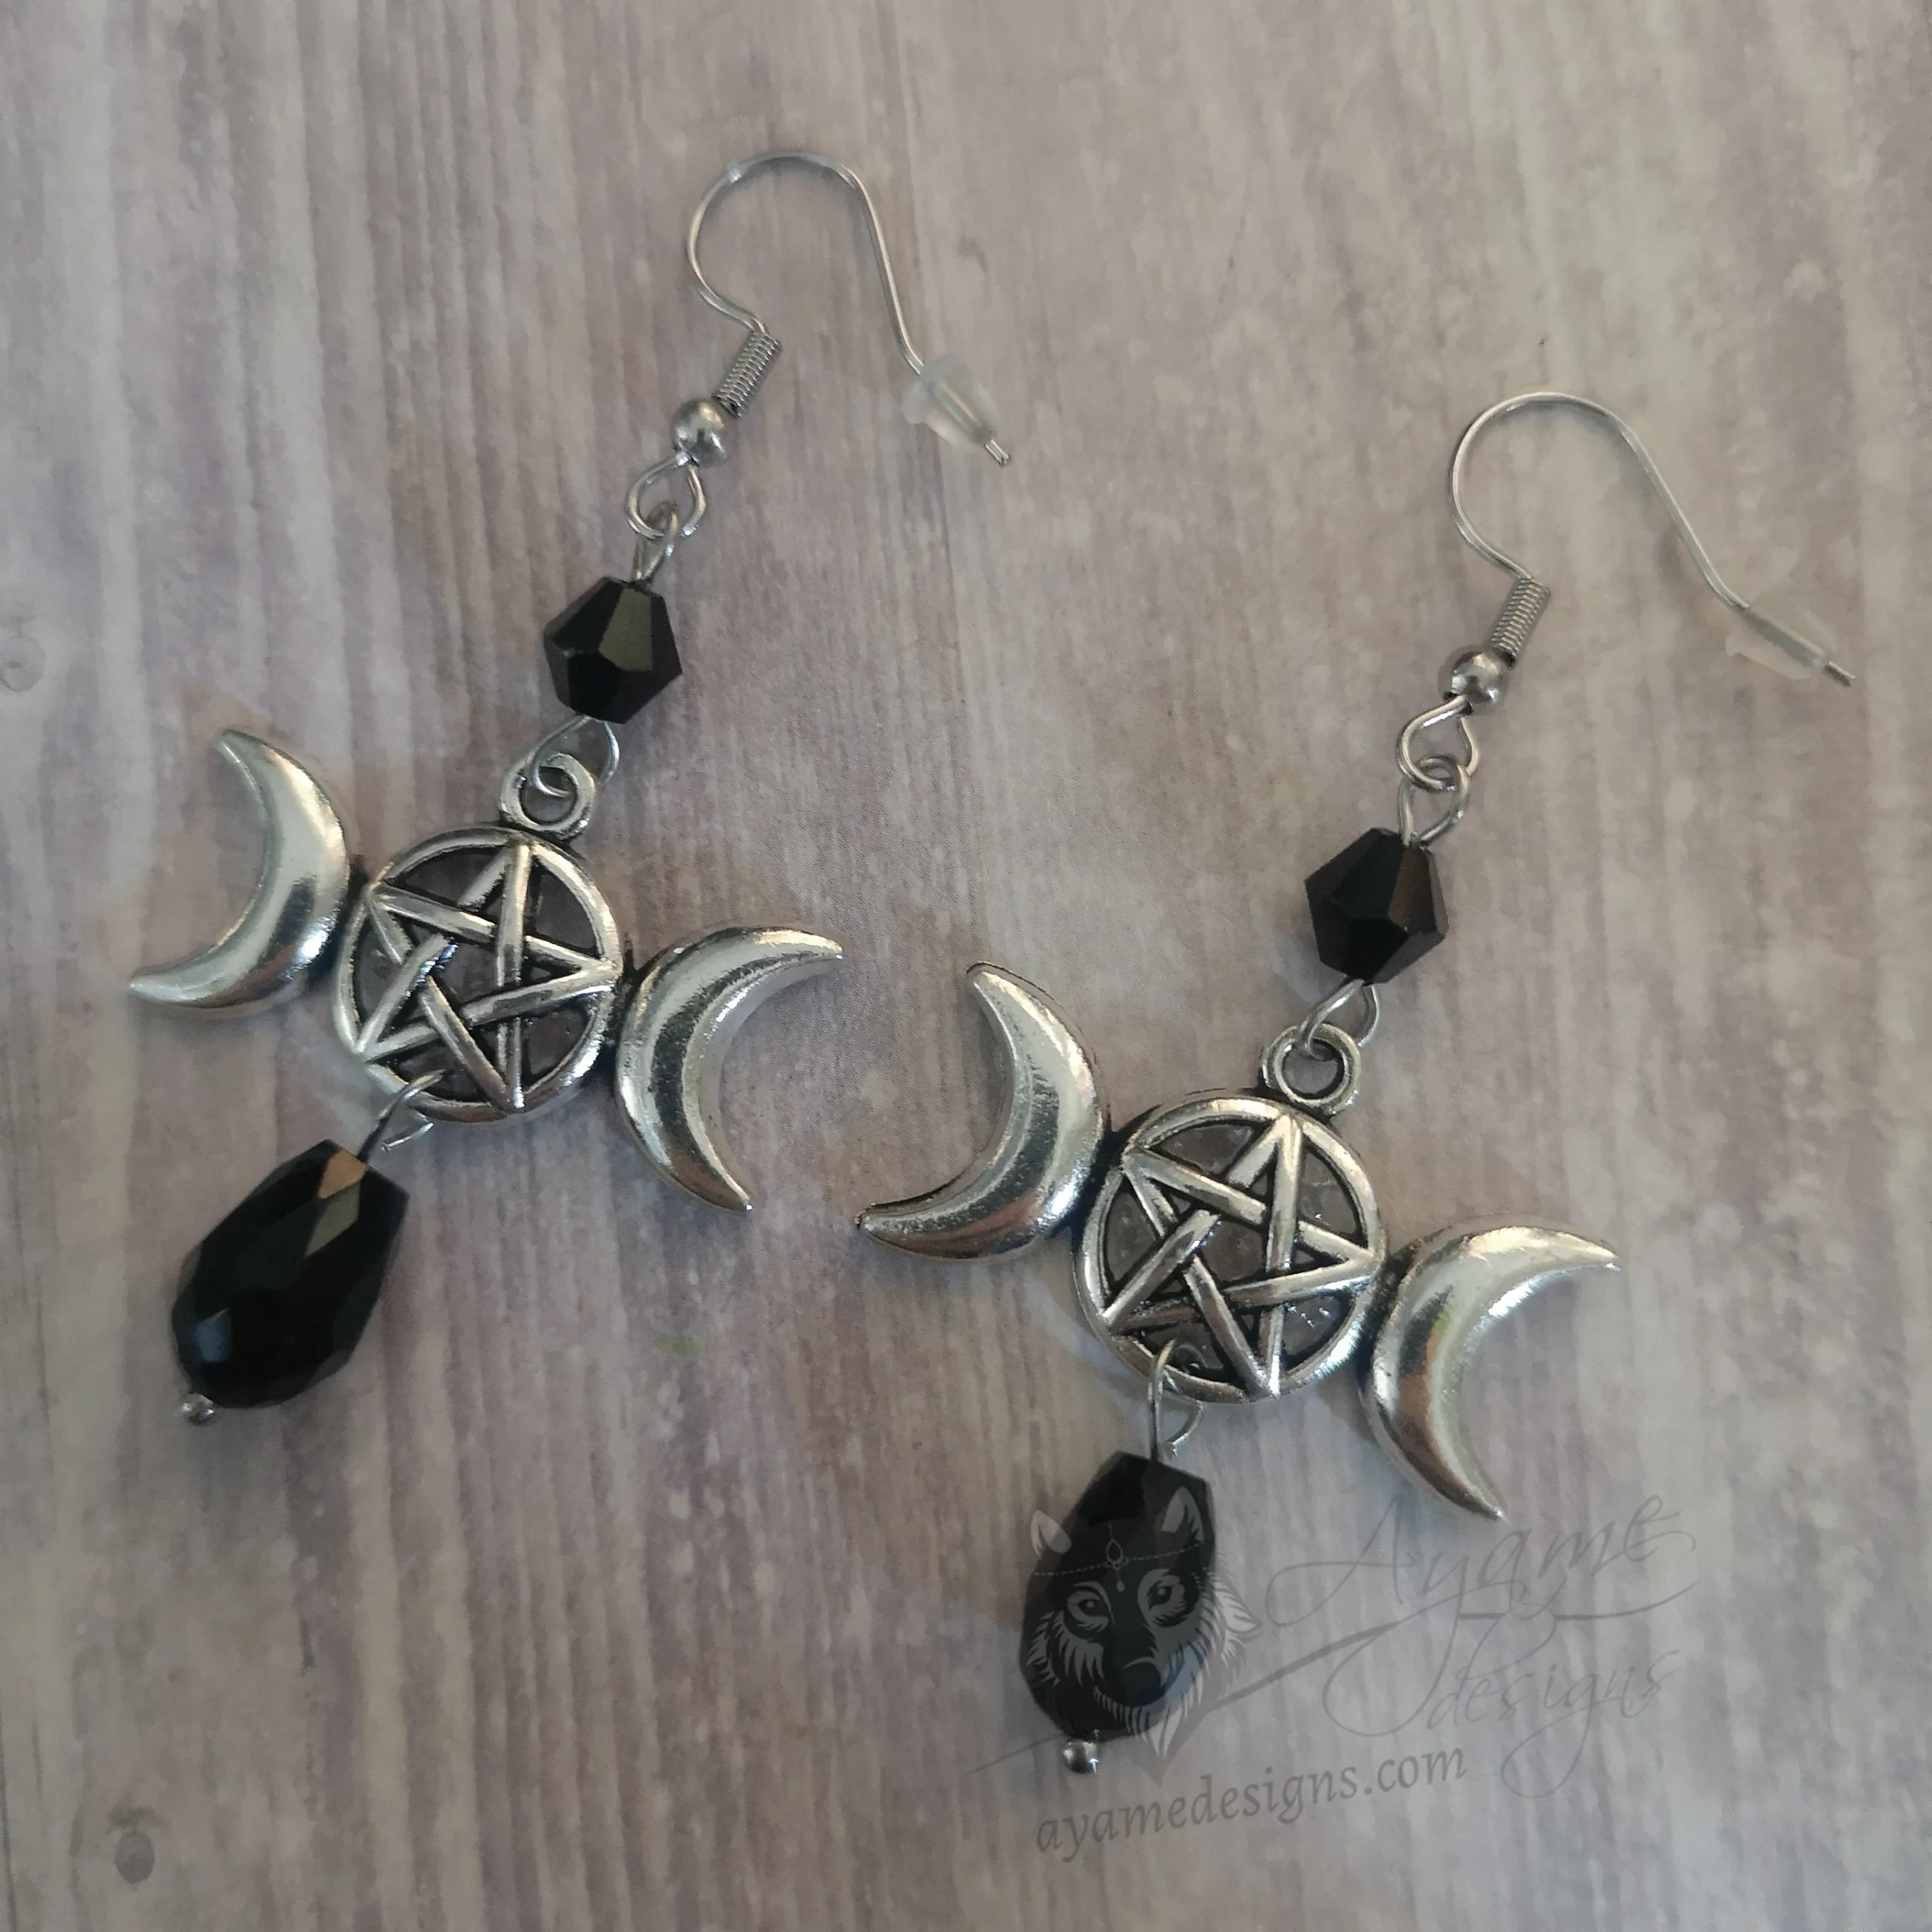 Handmade earrings with triple moon charms, black Austrian crystal beads and stainless steel earrings hooks